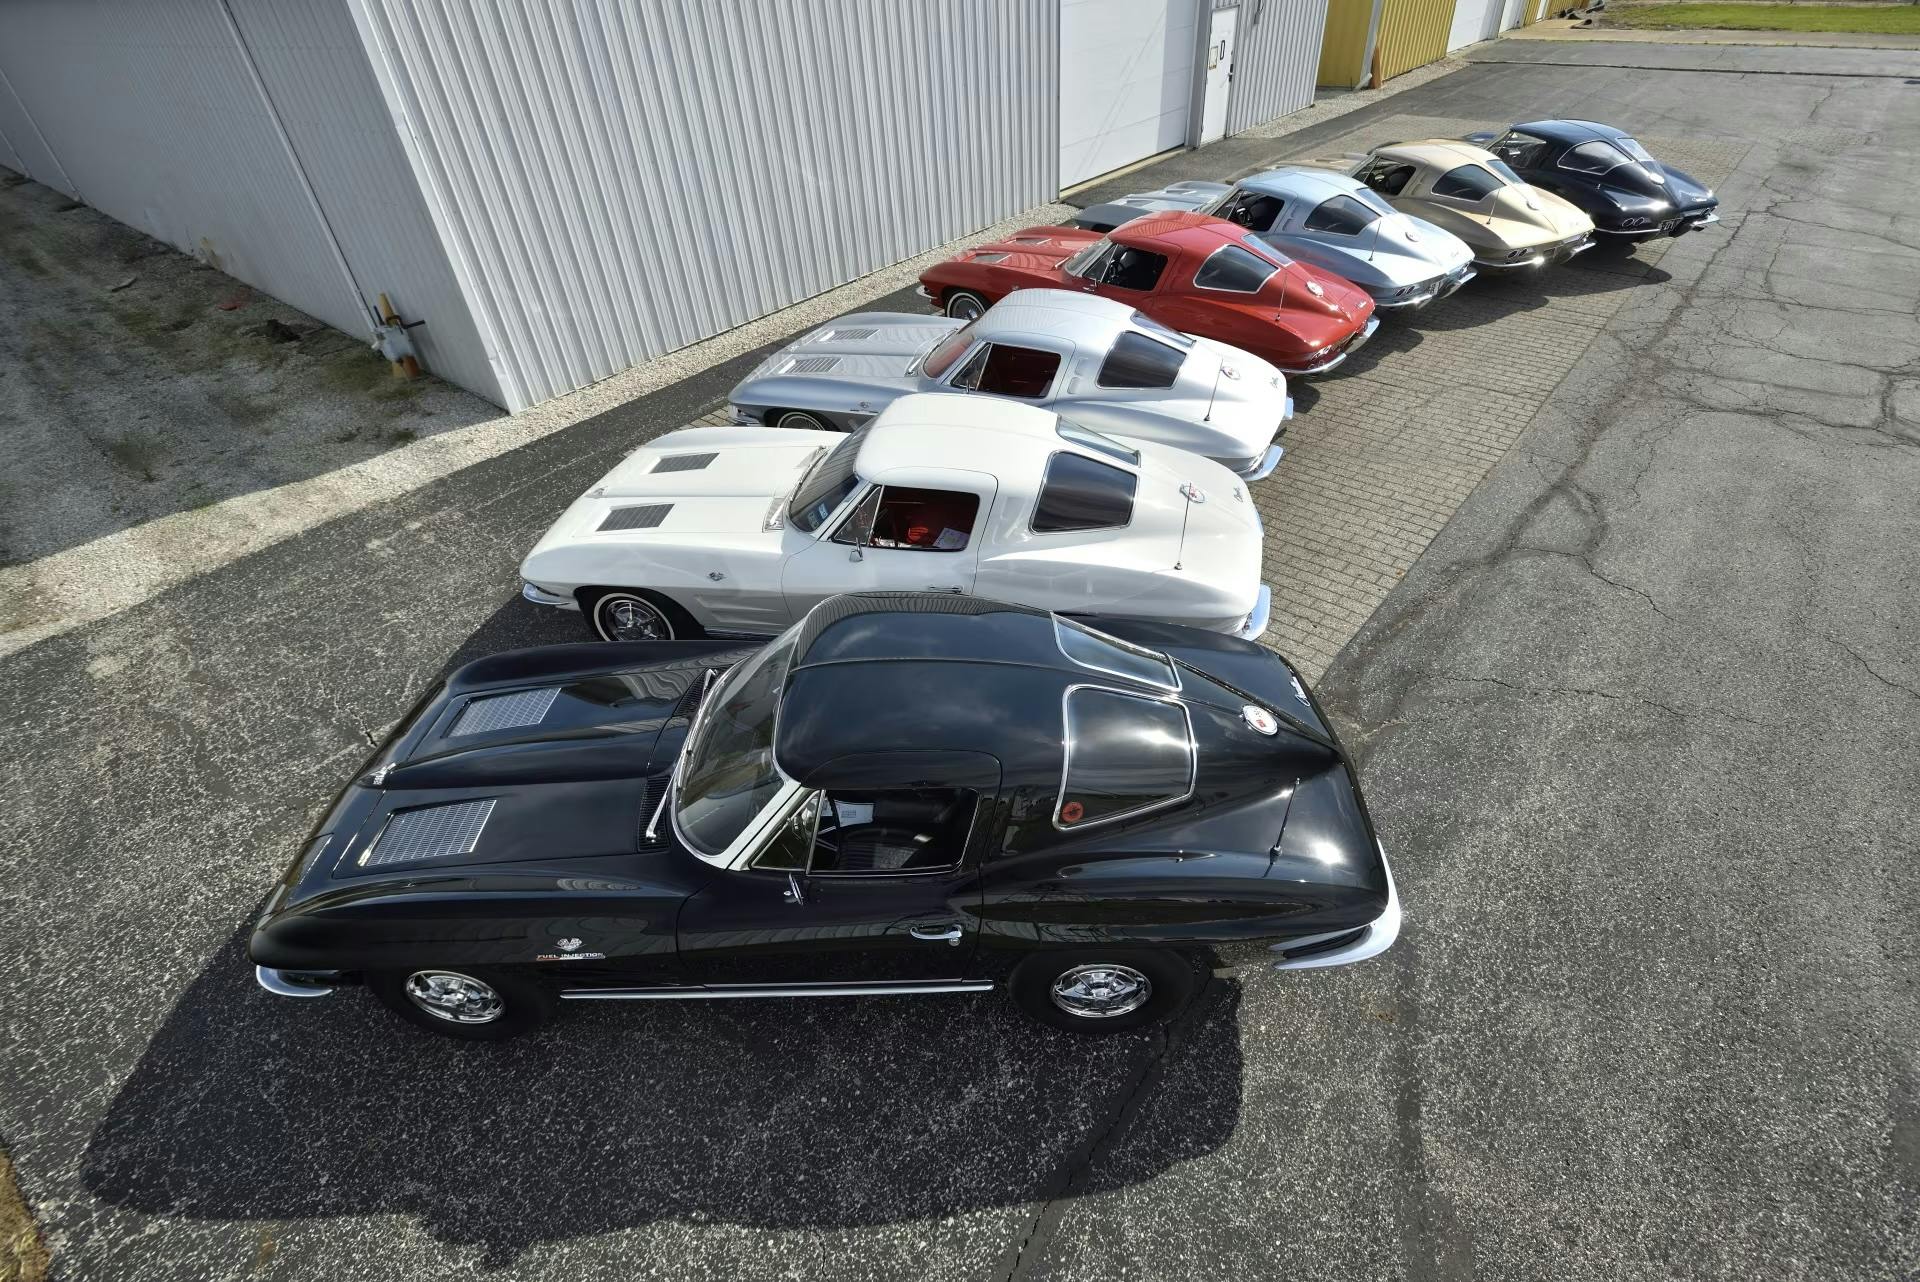 Group Split Window Corvette Auctions high angle rears